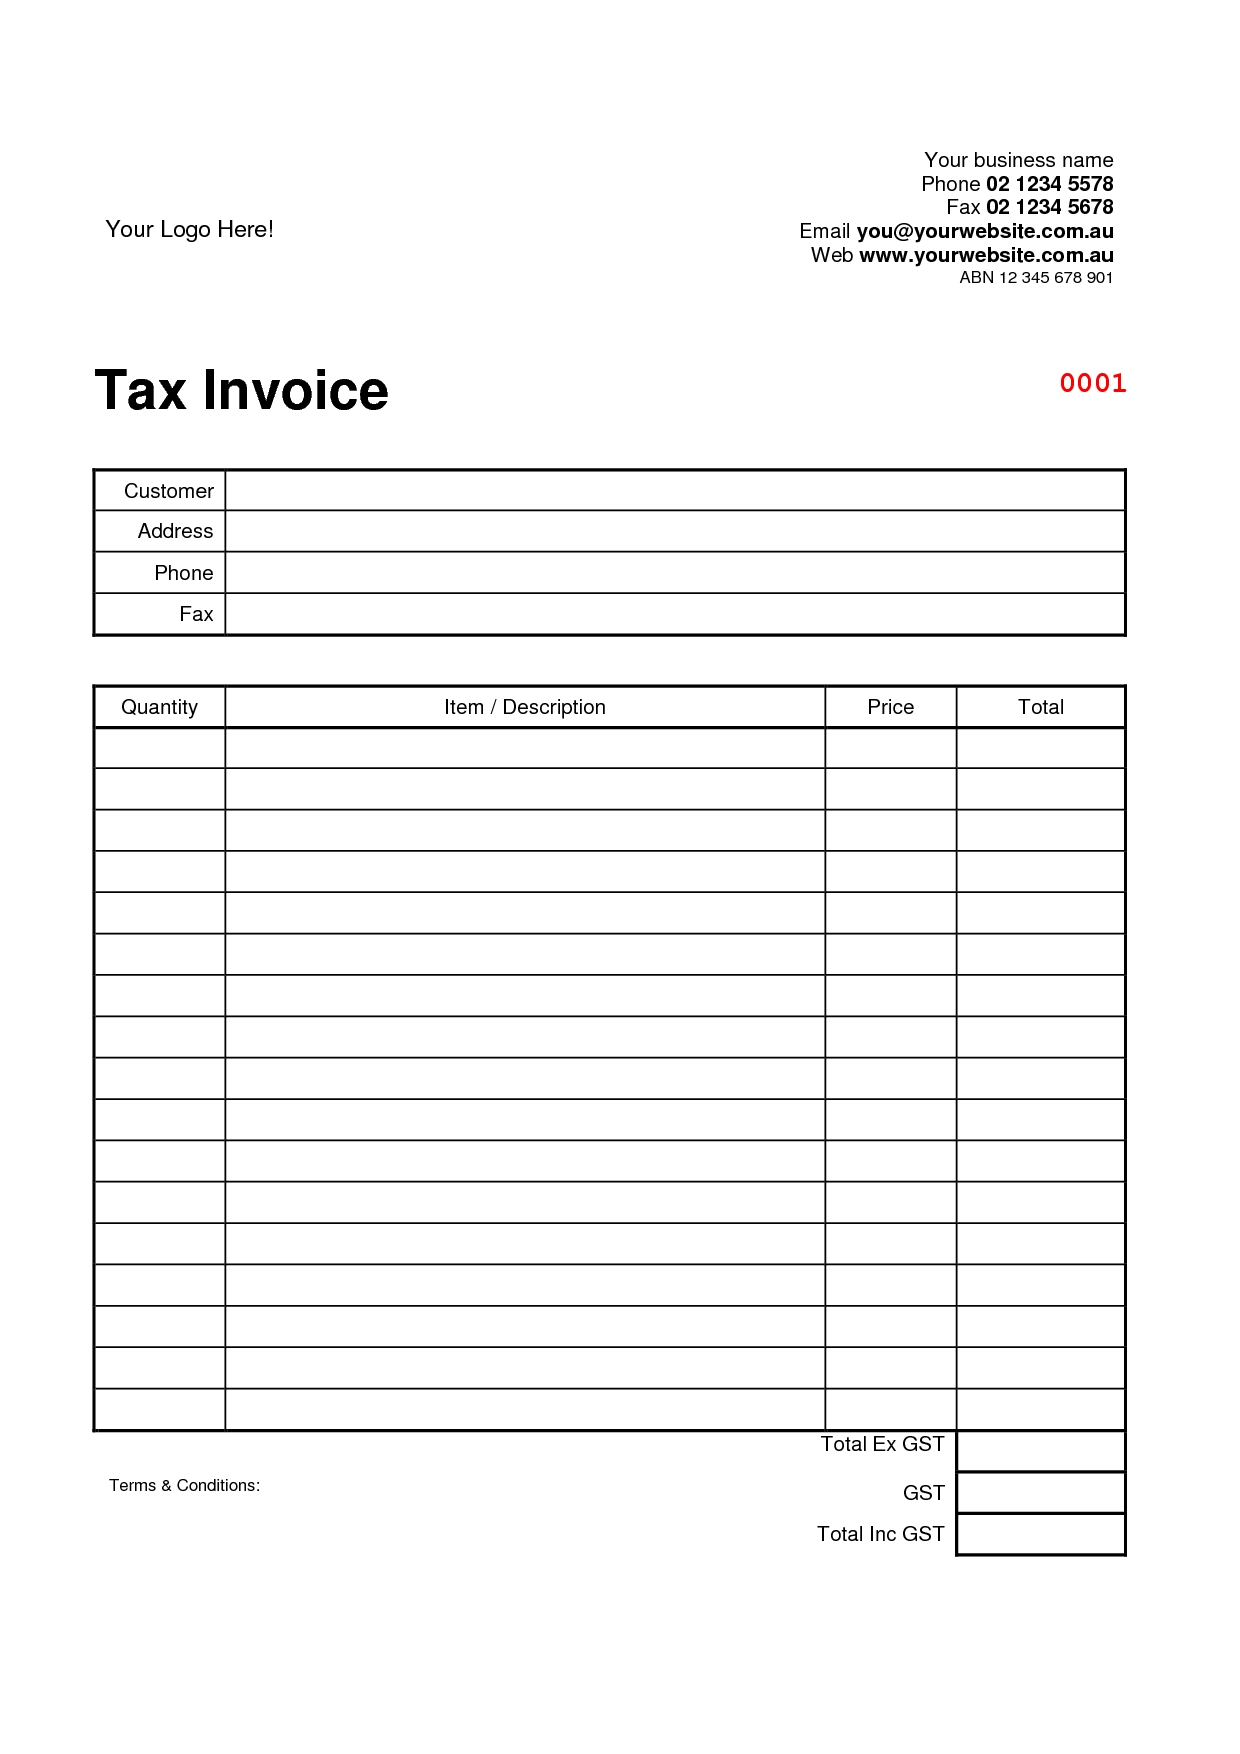 template tax invoice australia employmen tax invoice australia template